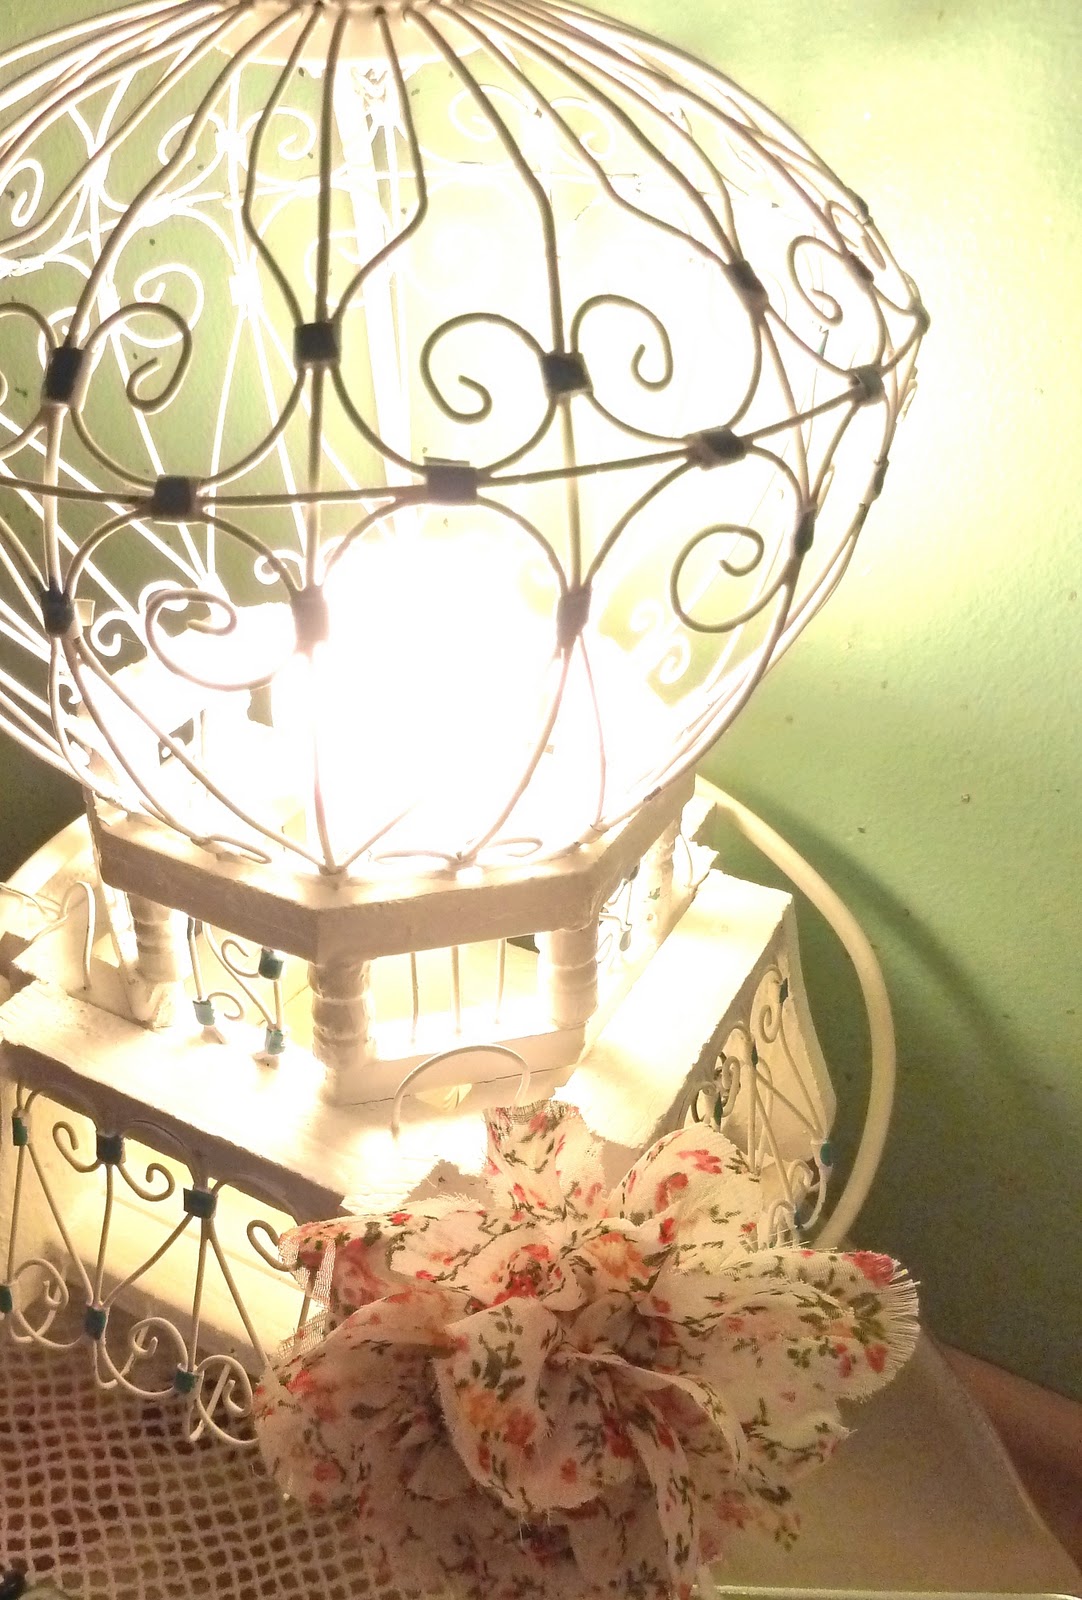 Adventurous Design Quest: My new bedside lamp